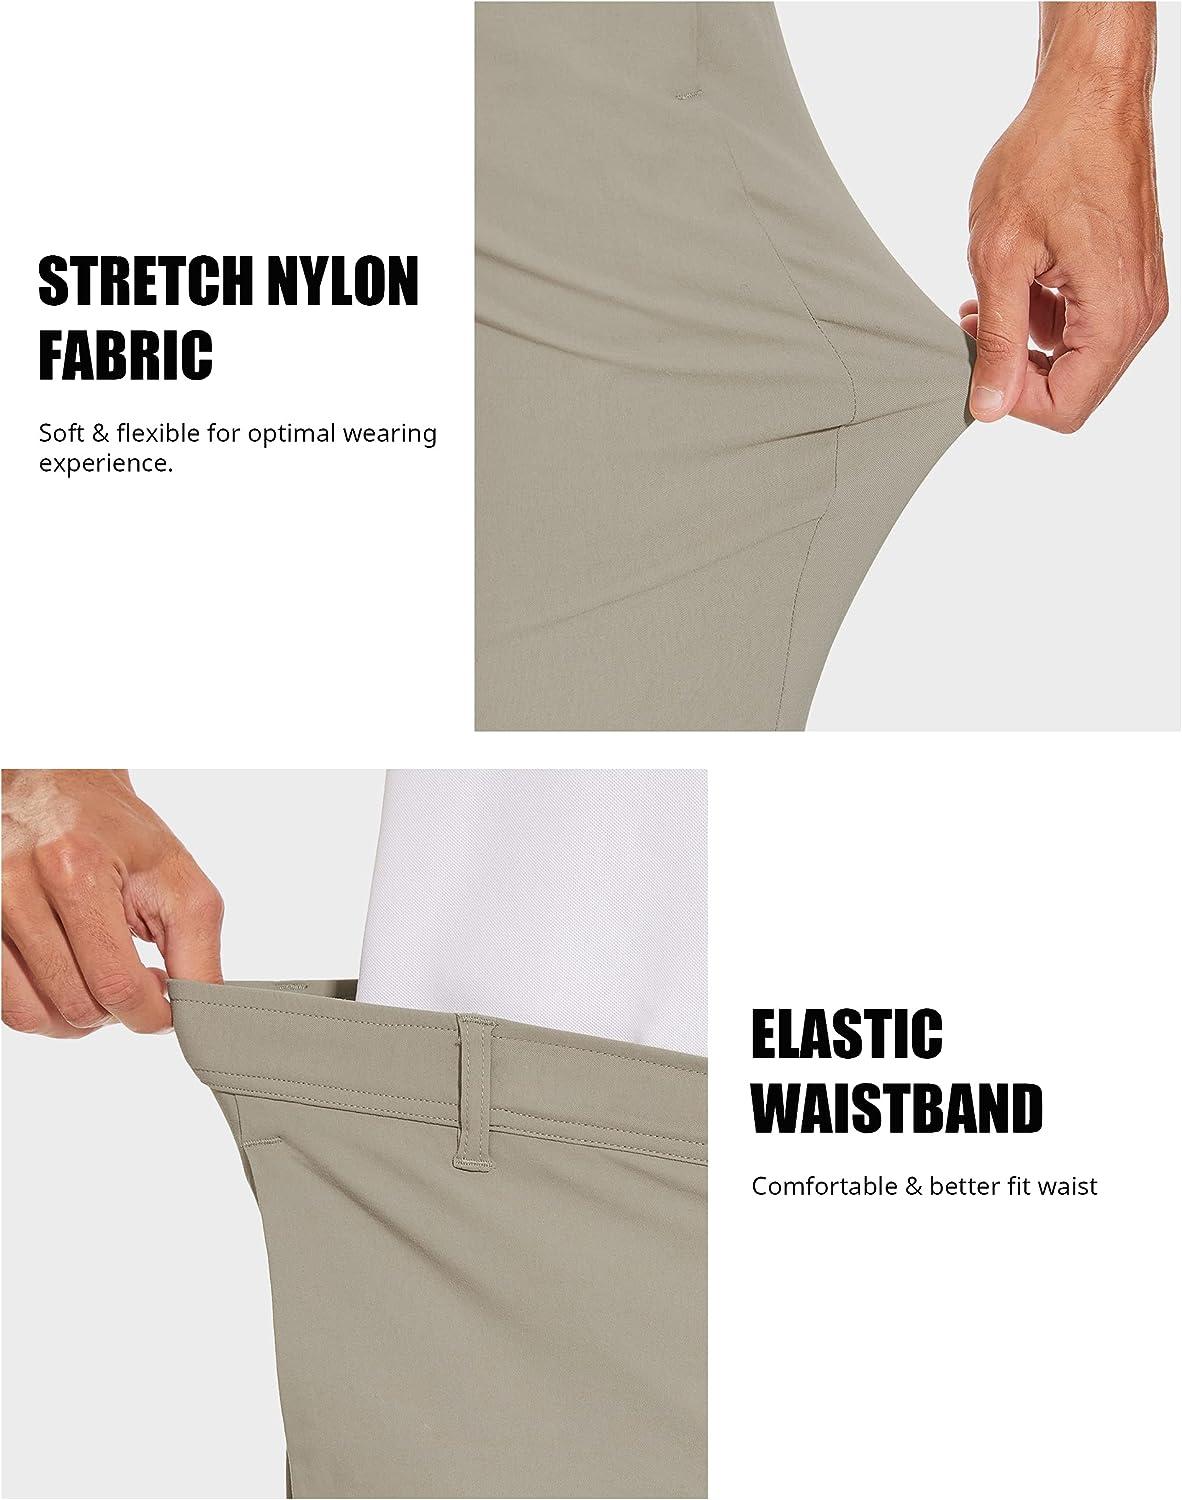 Long Zipper Pocket Elastic Waist Slim Leg Stretch Pants